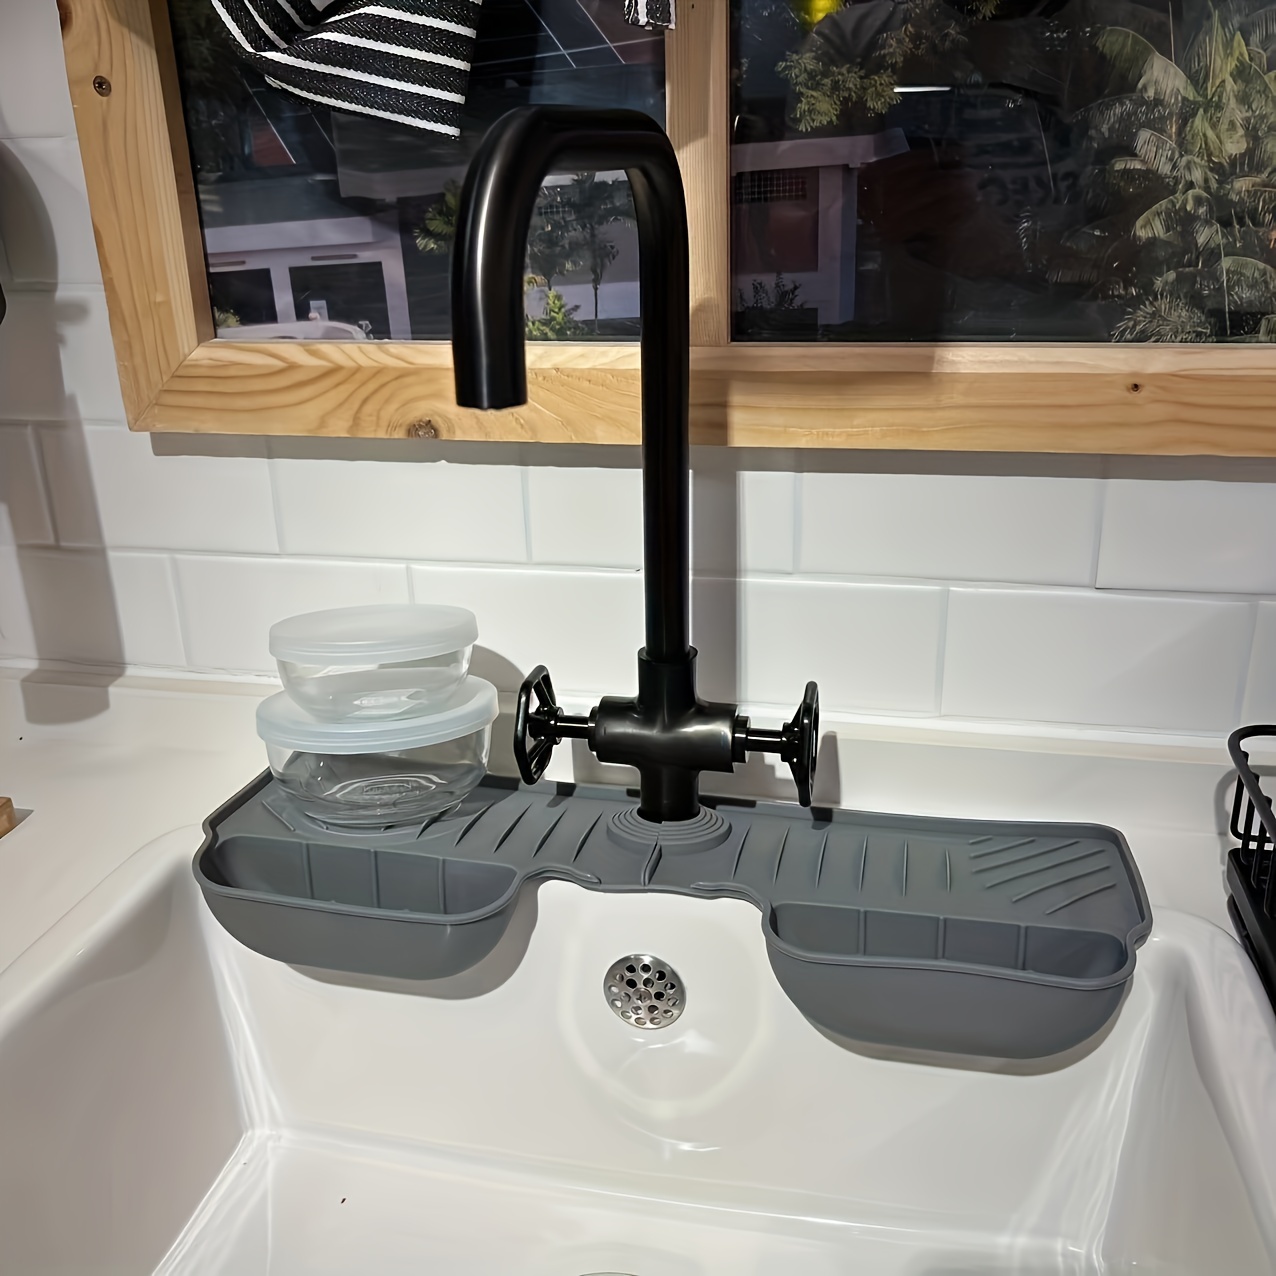  QEYUMY Silicone Kitchen Sink Splash Pad Behind Faucet